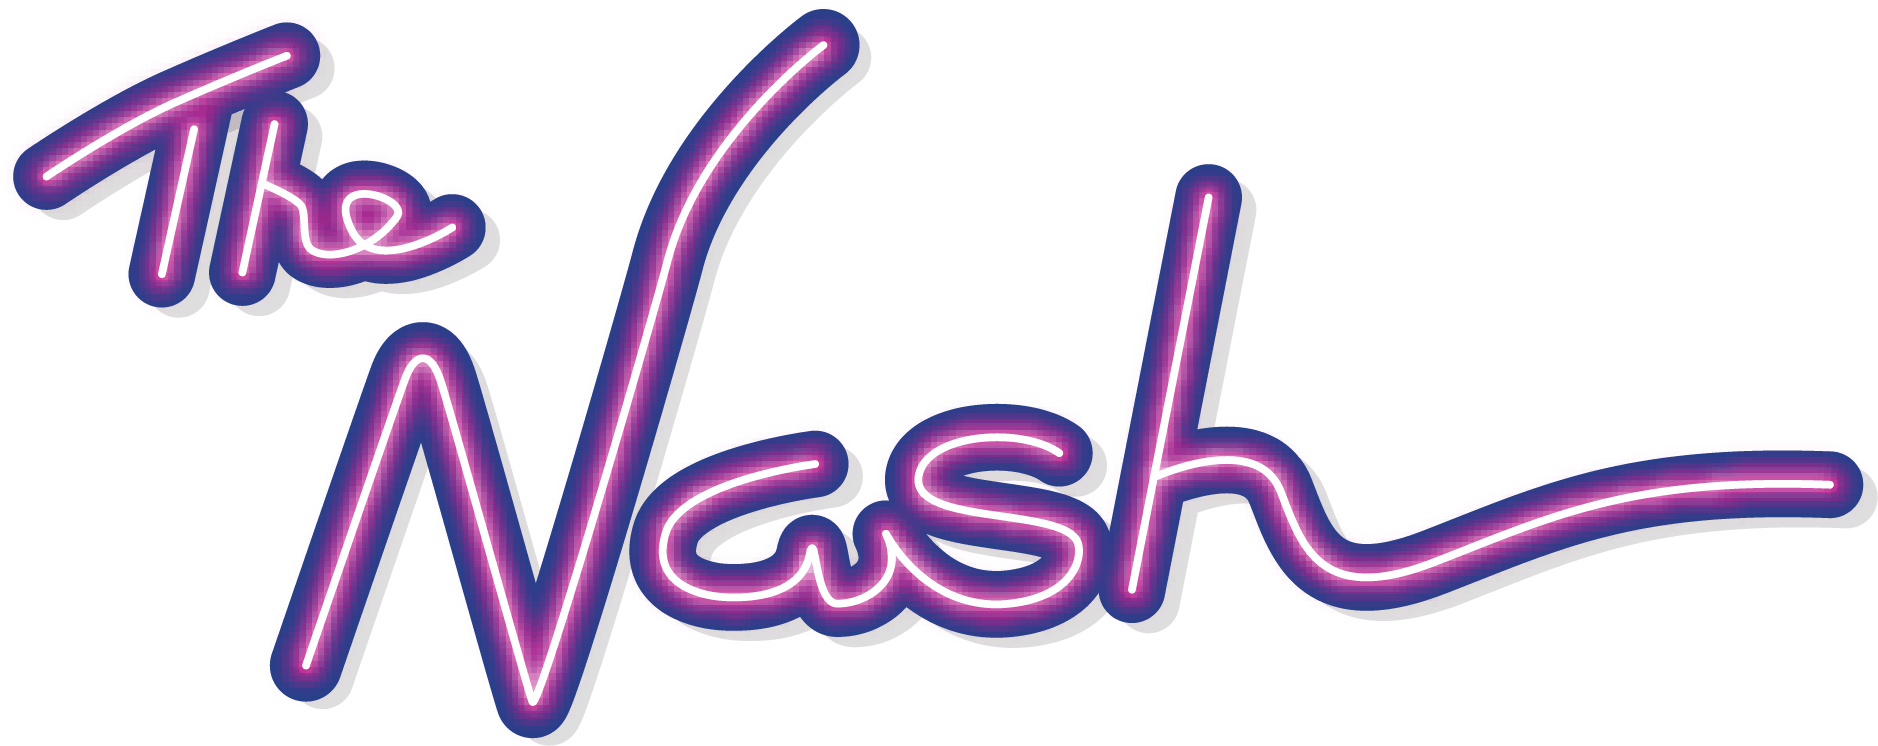 Special thanks to. Nash Store лого. Наш лого. Nash logo. 209 Logo.